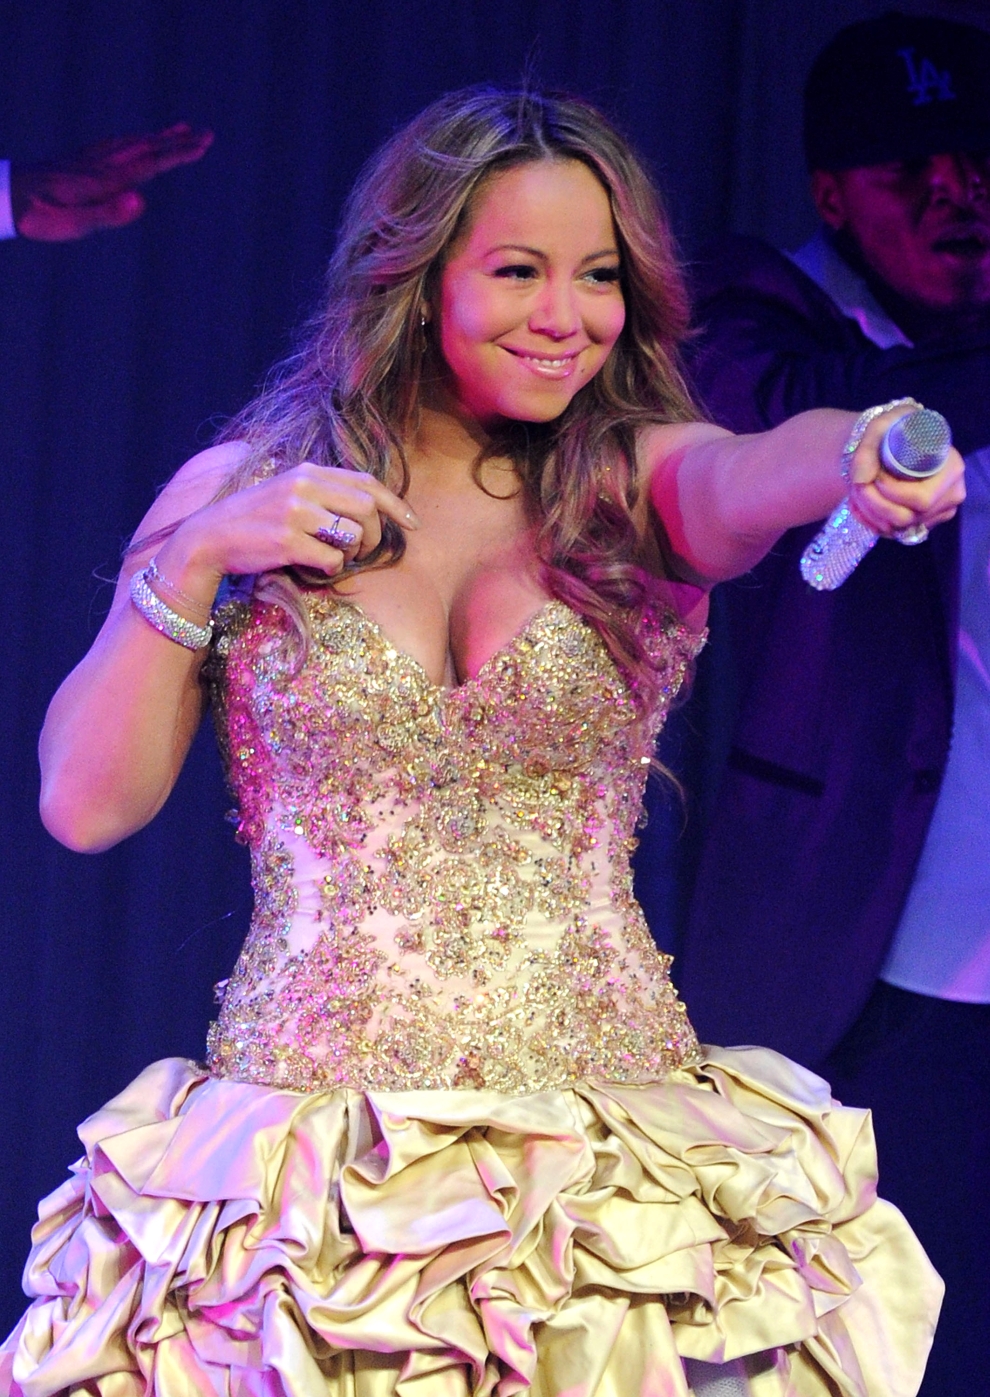 Mariah Carey - Angels Advocate koncert